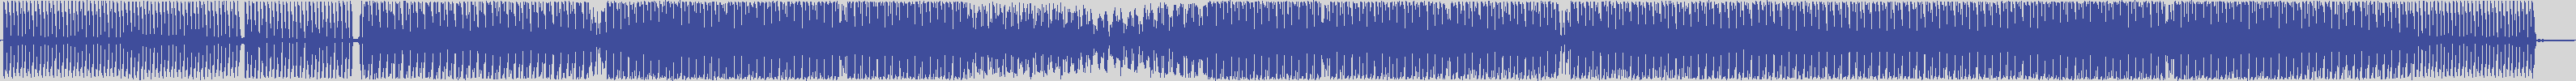 nf_boyz_records [NFY049] Bastian Sander - Side by Side [Fashion Factor Mix] audio wave form